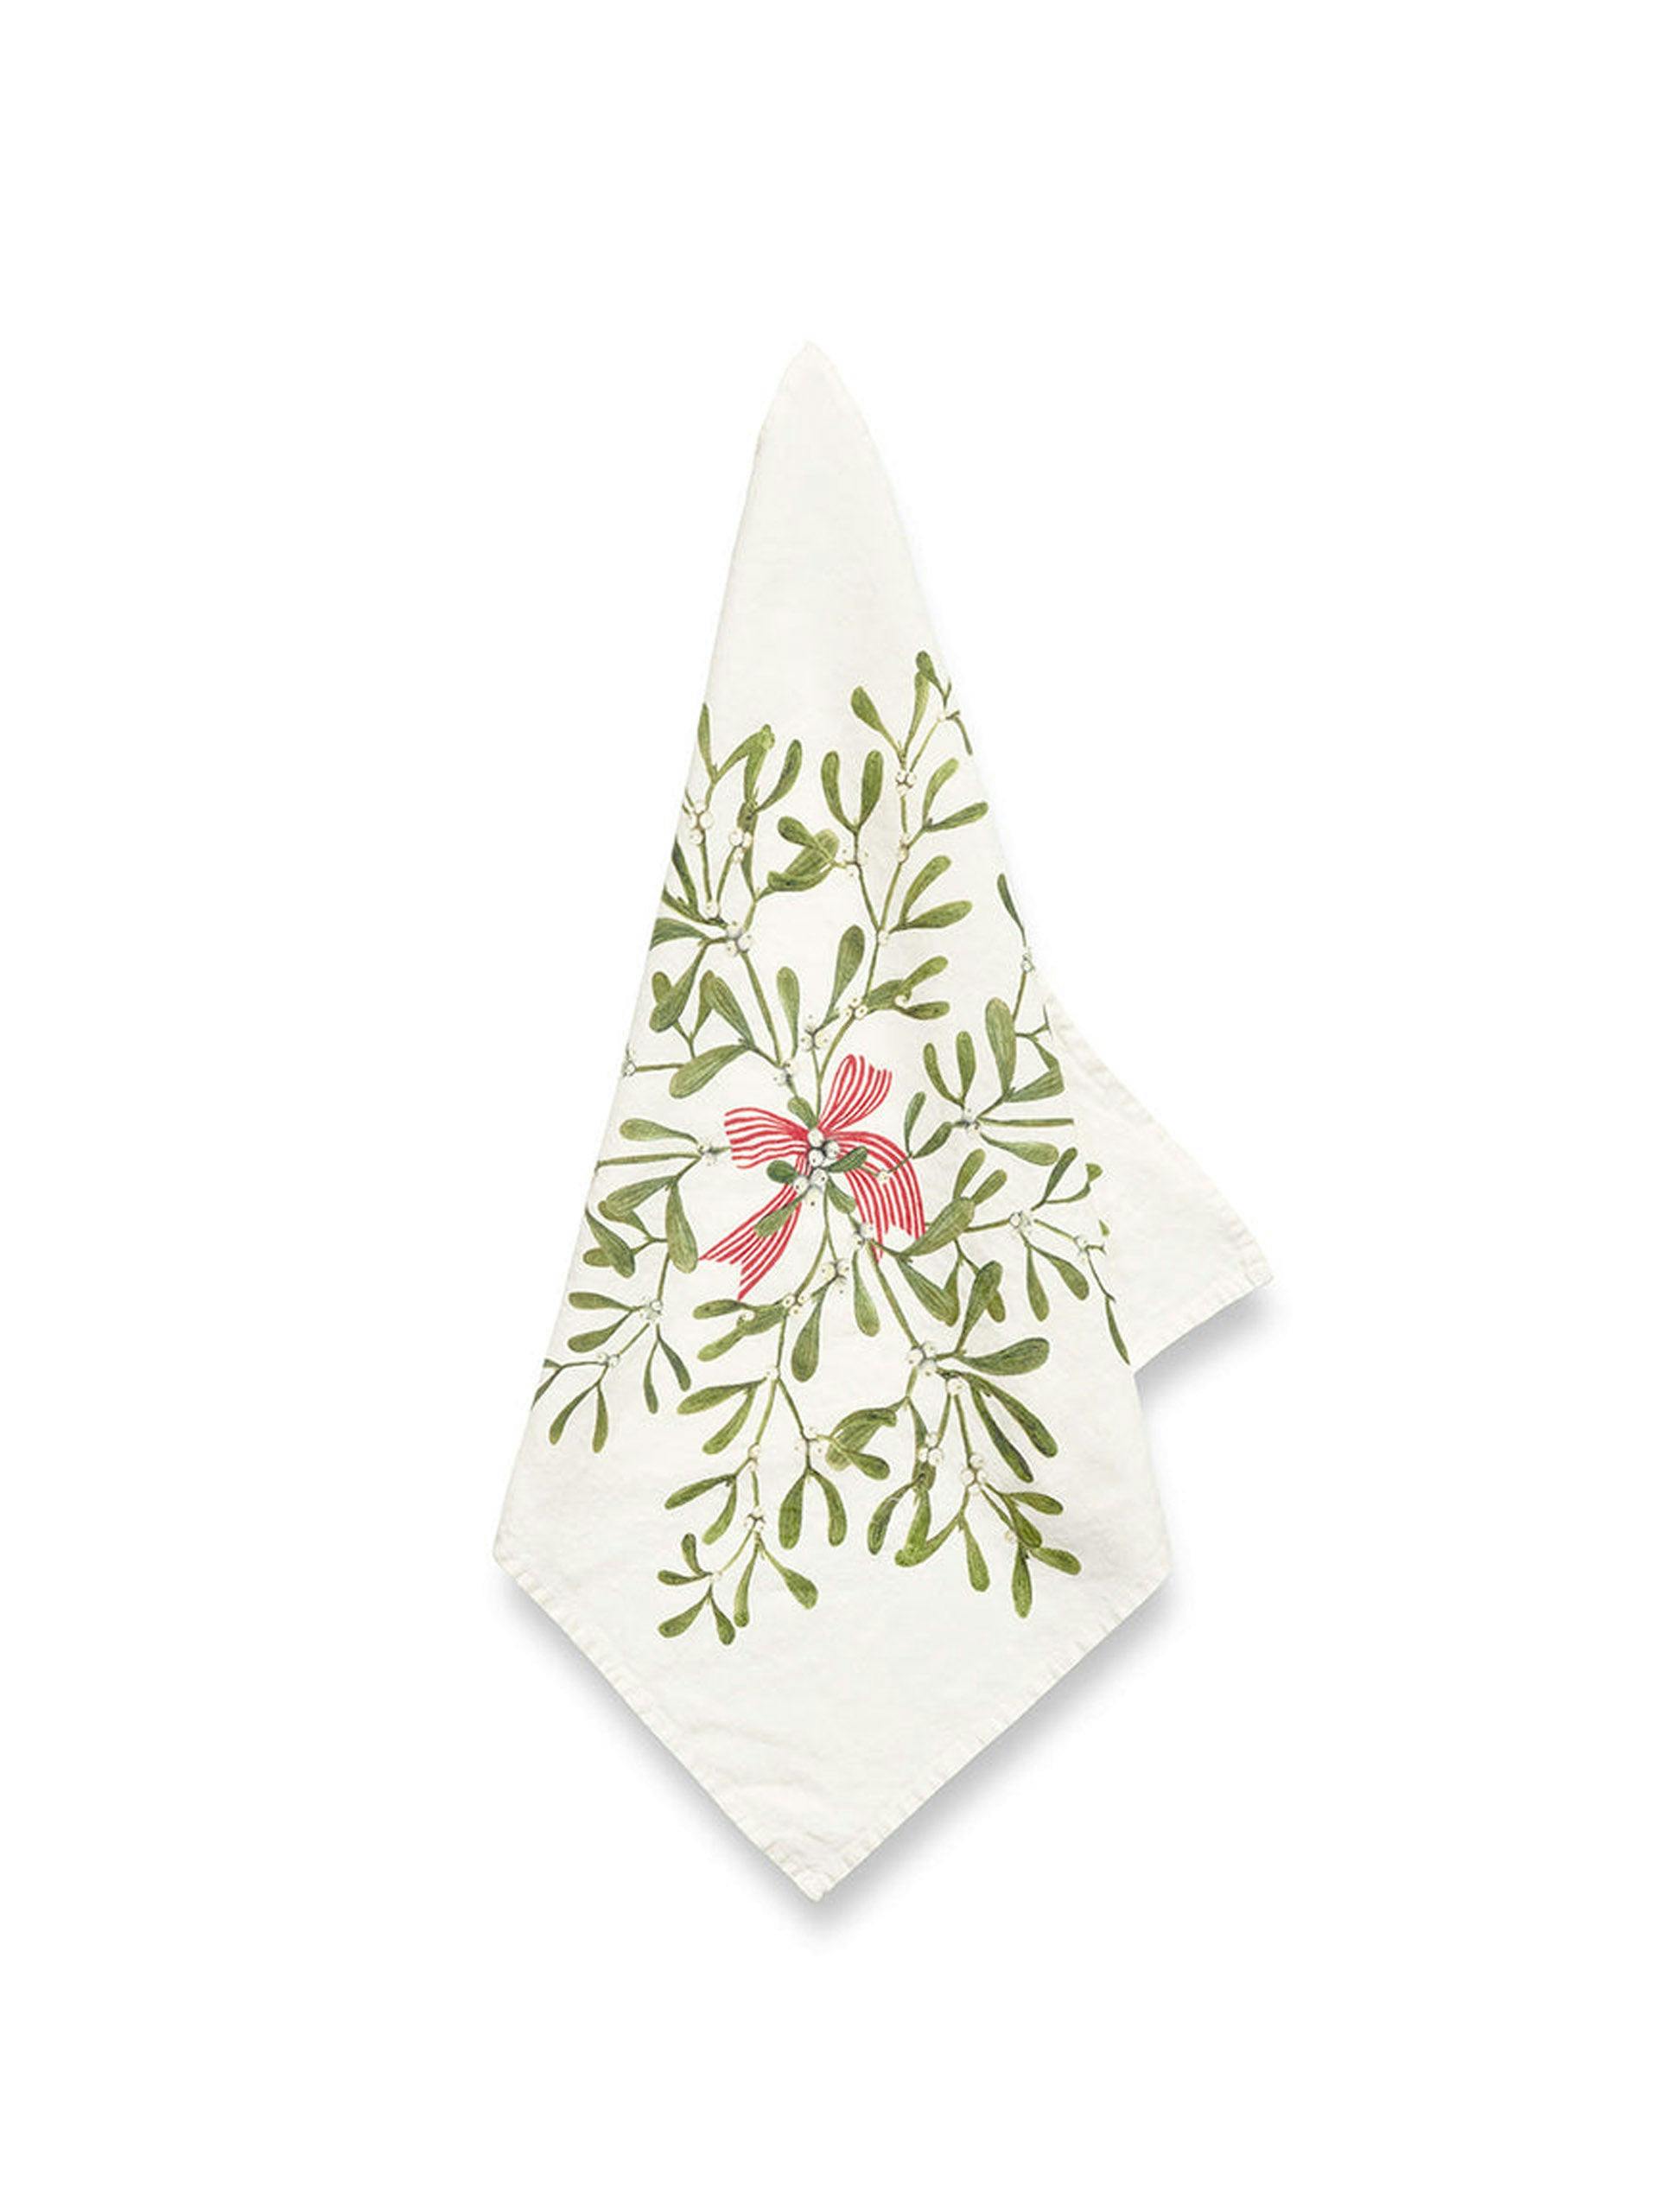 Mistletoe kiss linen napkin